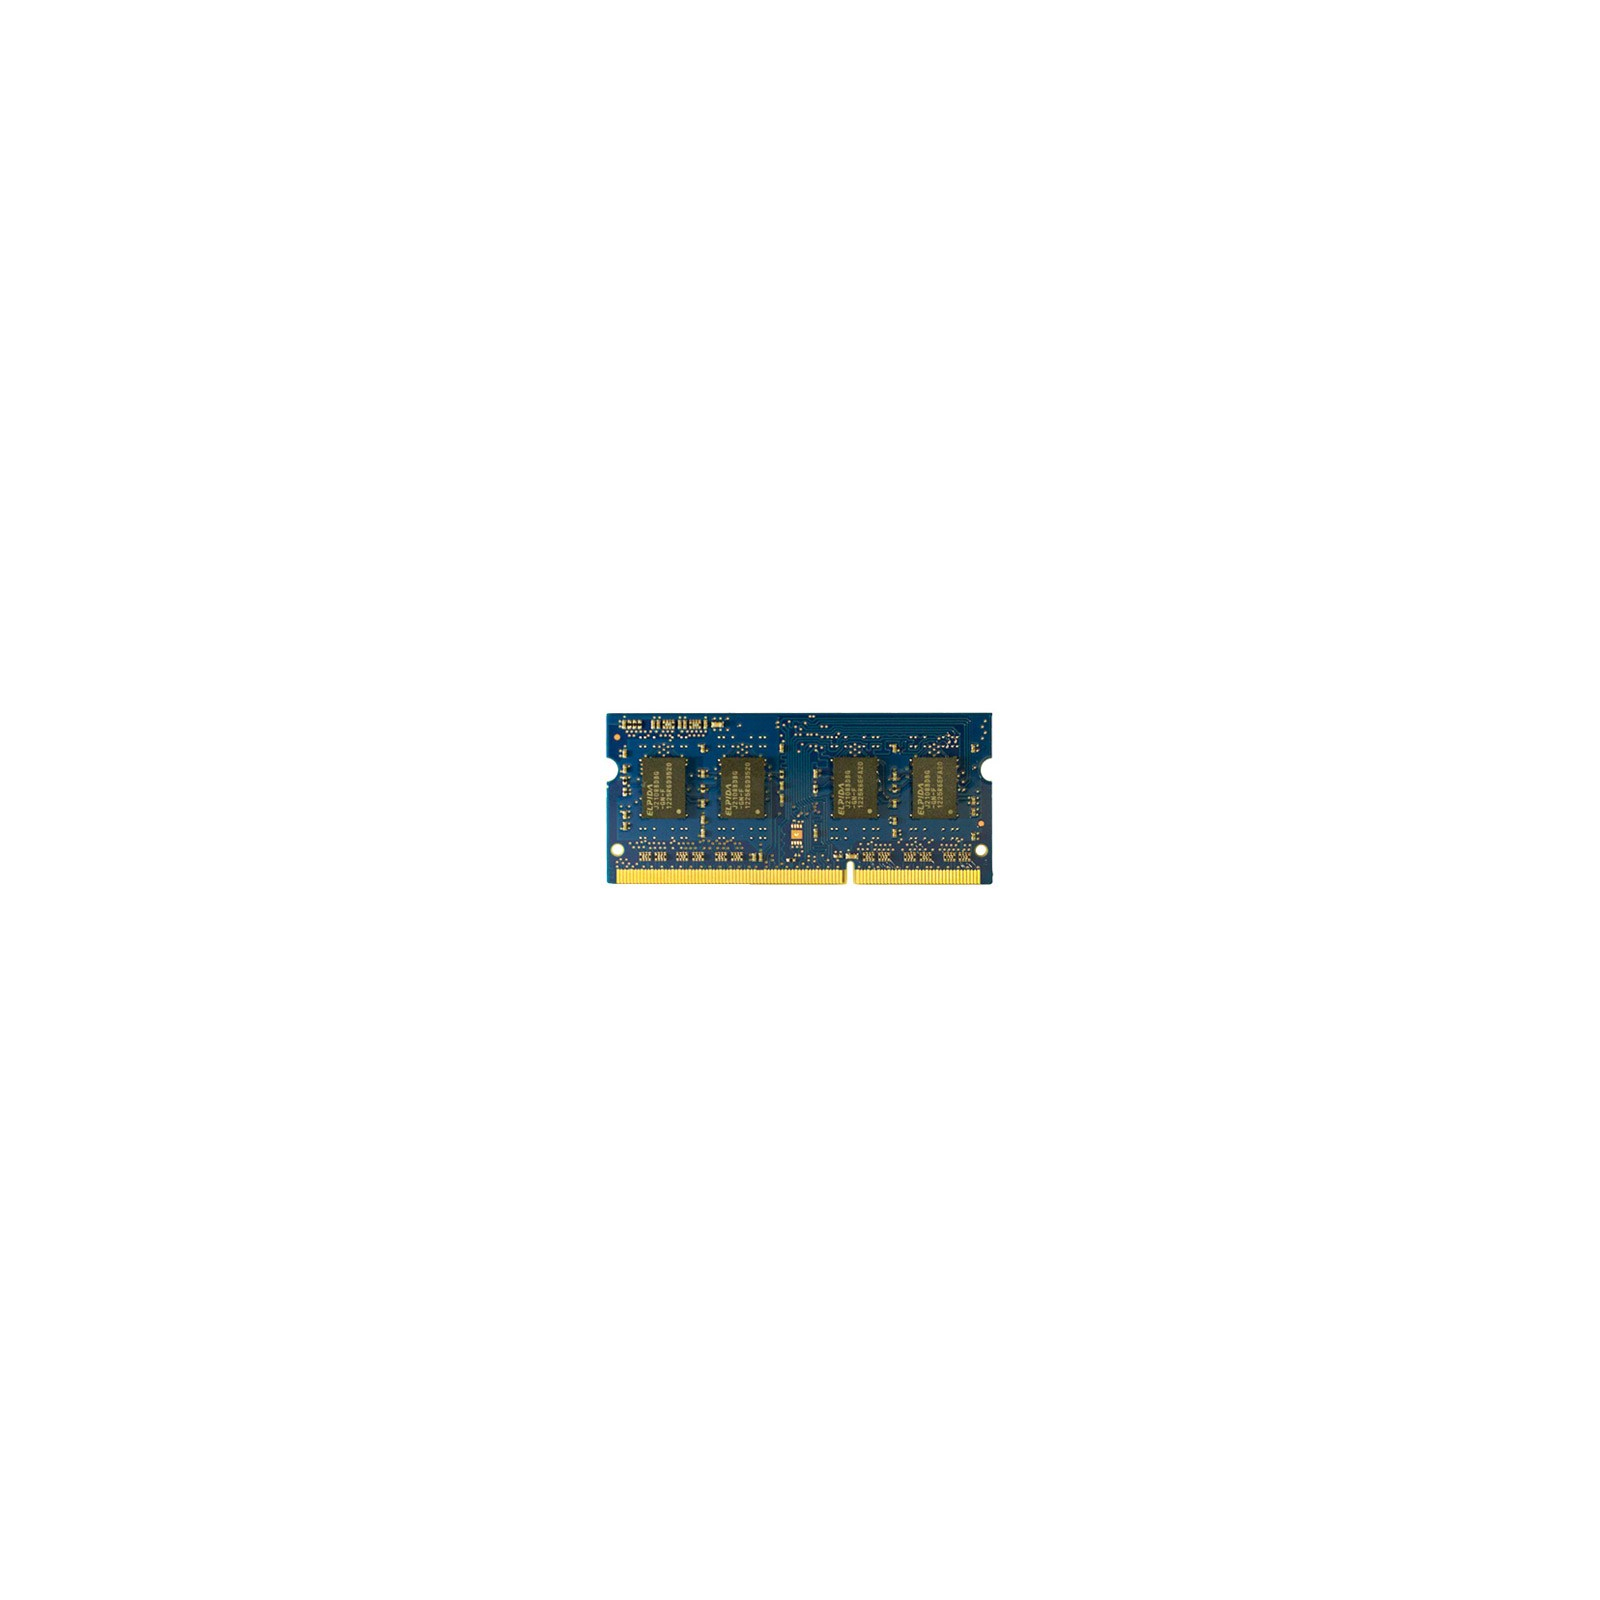 Модуль пам'яті для ноутбука SoDIMM DDR3 2GB 1600 MHz Elpida (EBJ20UF8BDU0-GN-F)